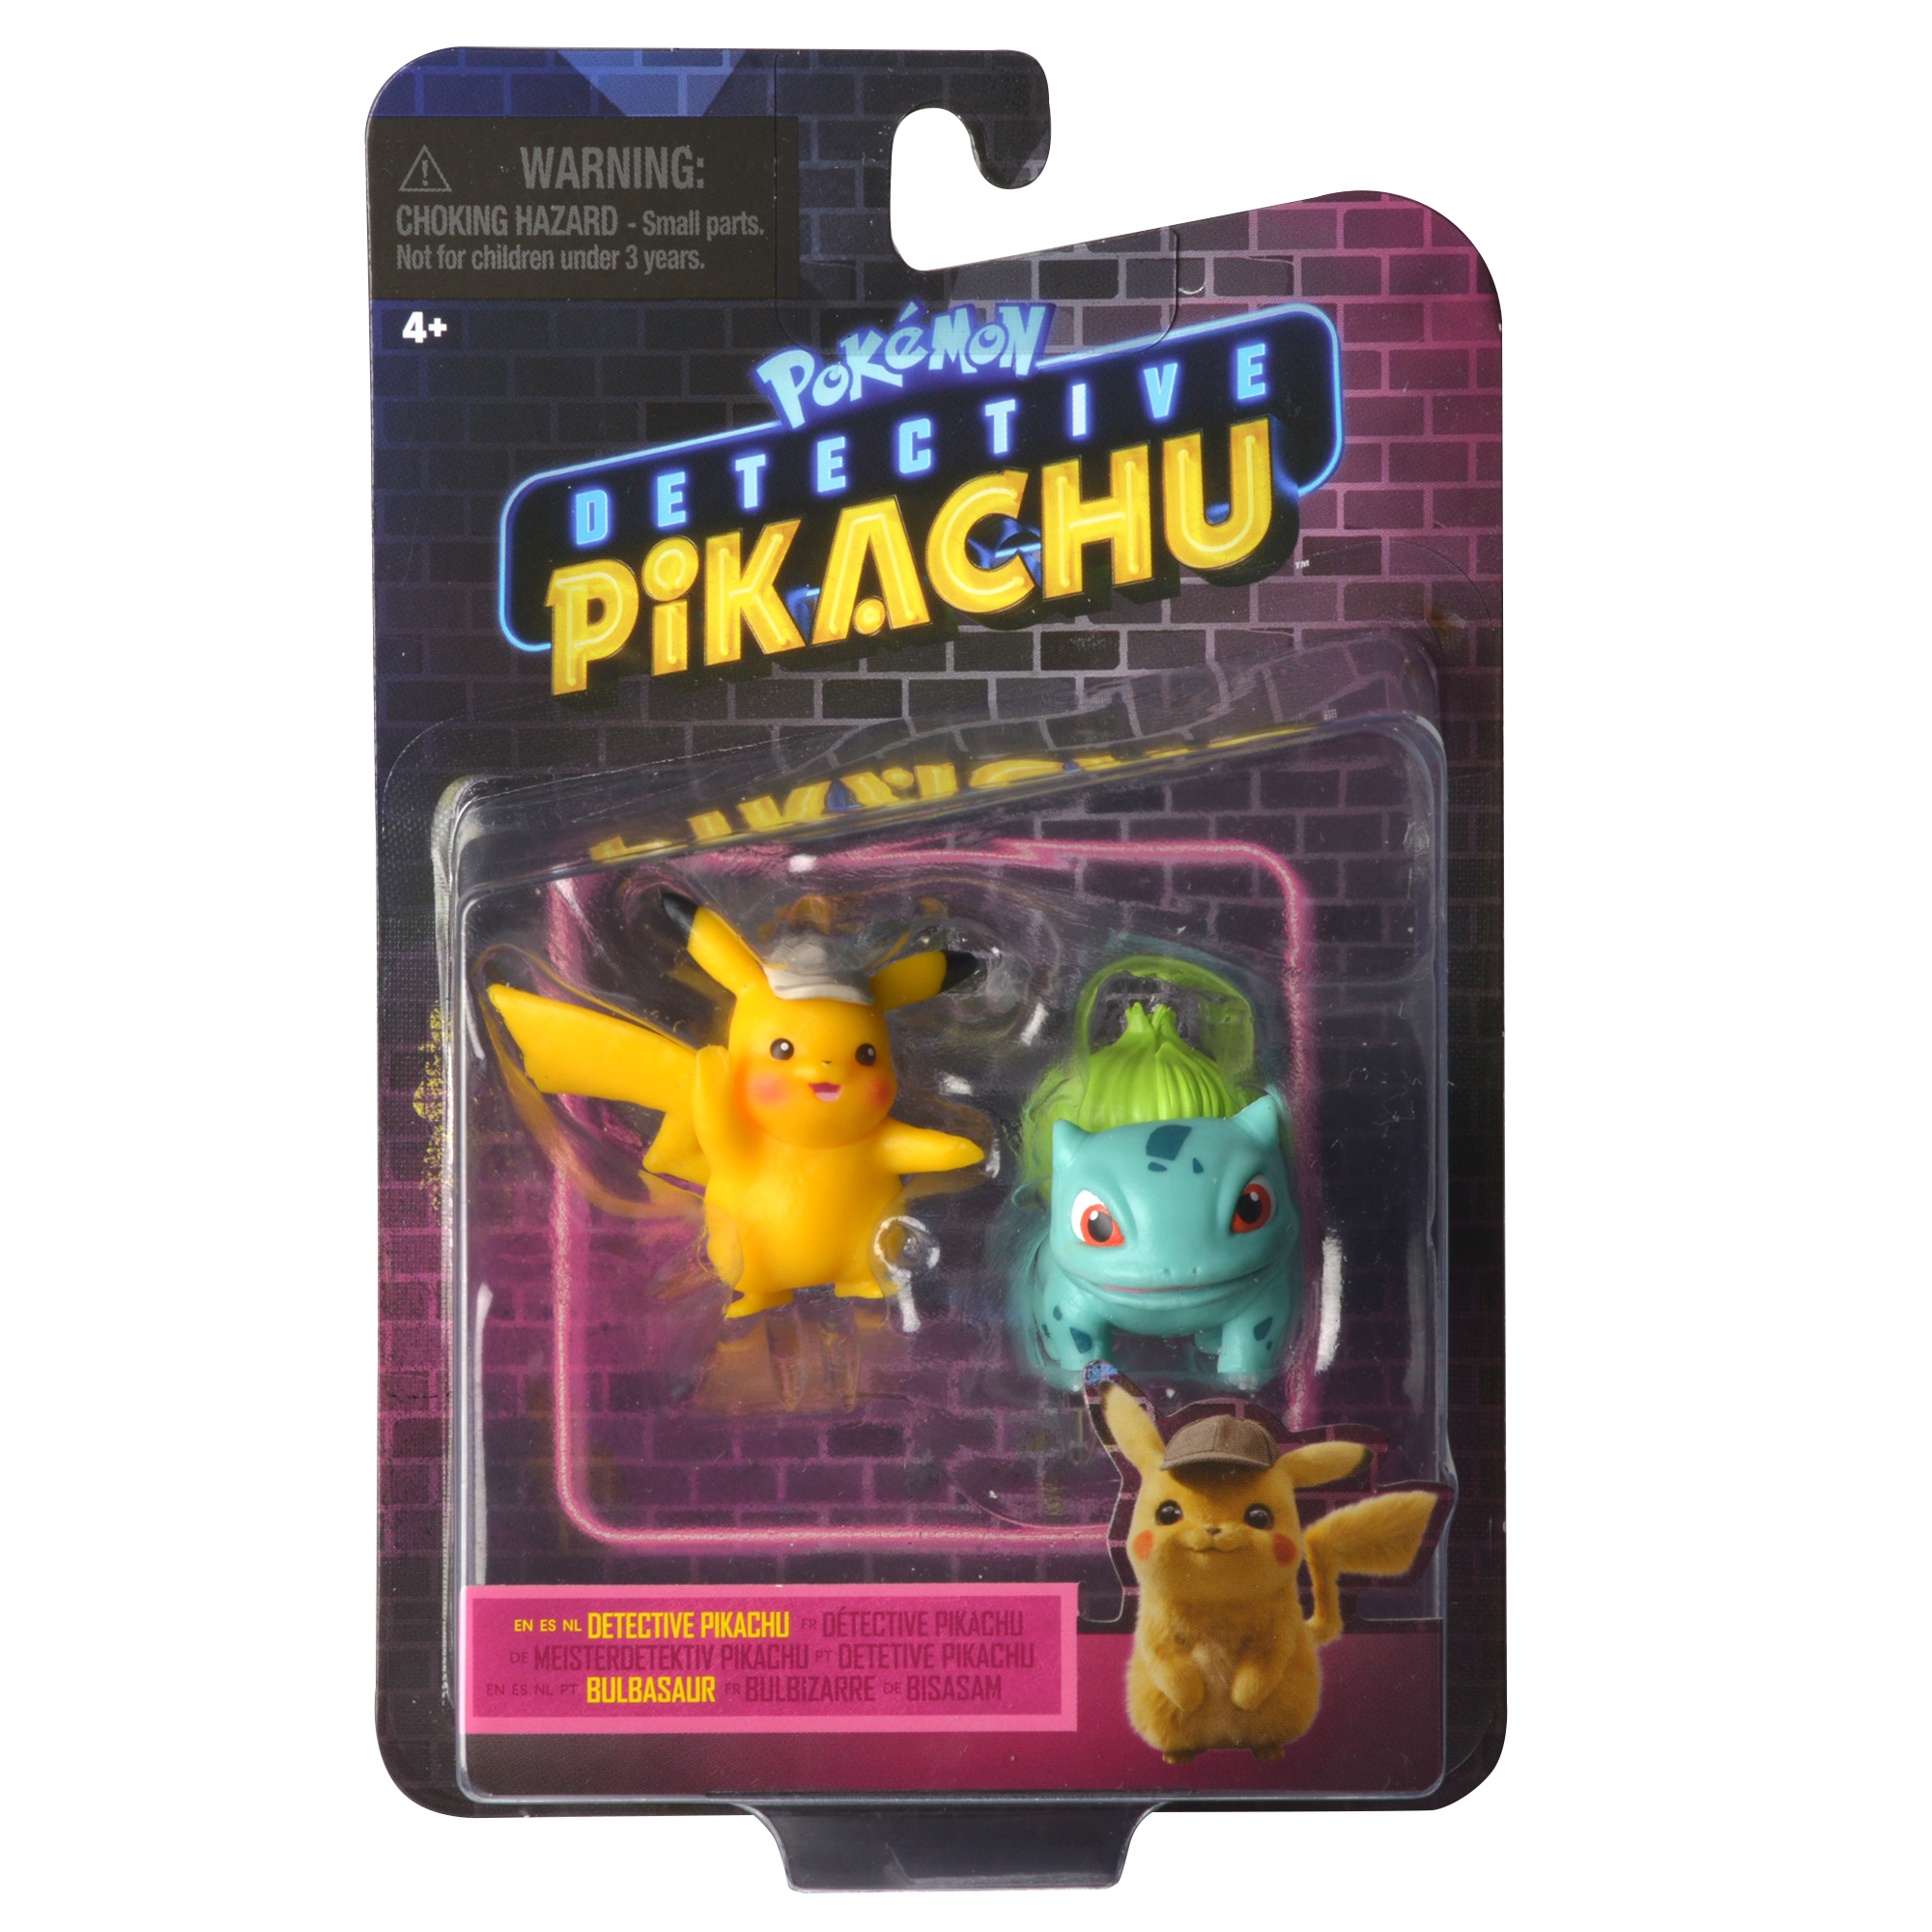 pikachu detective toys